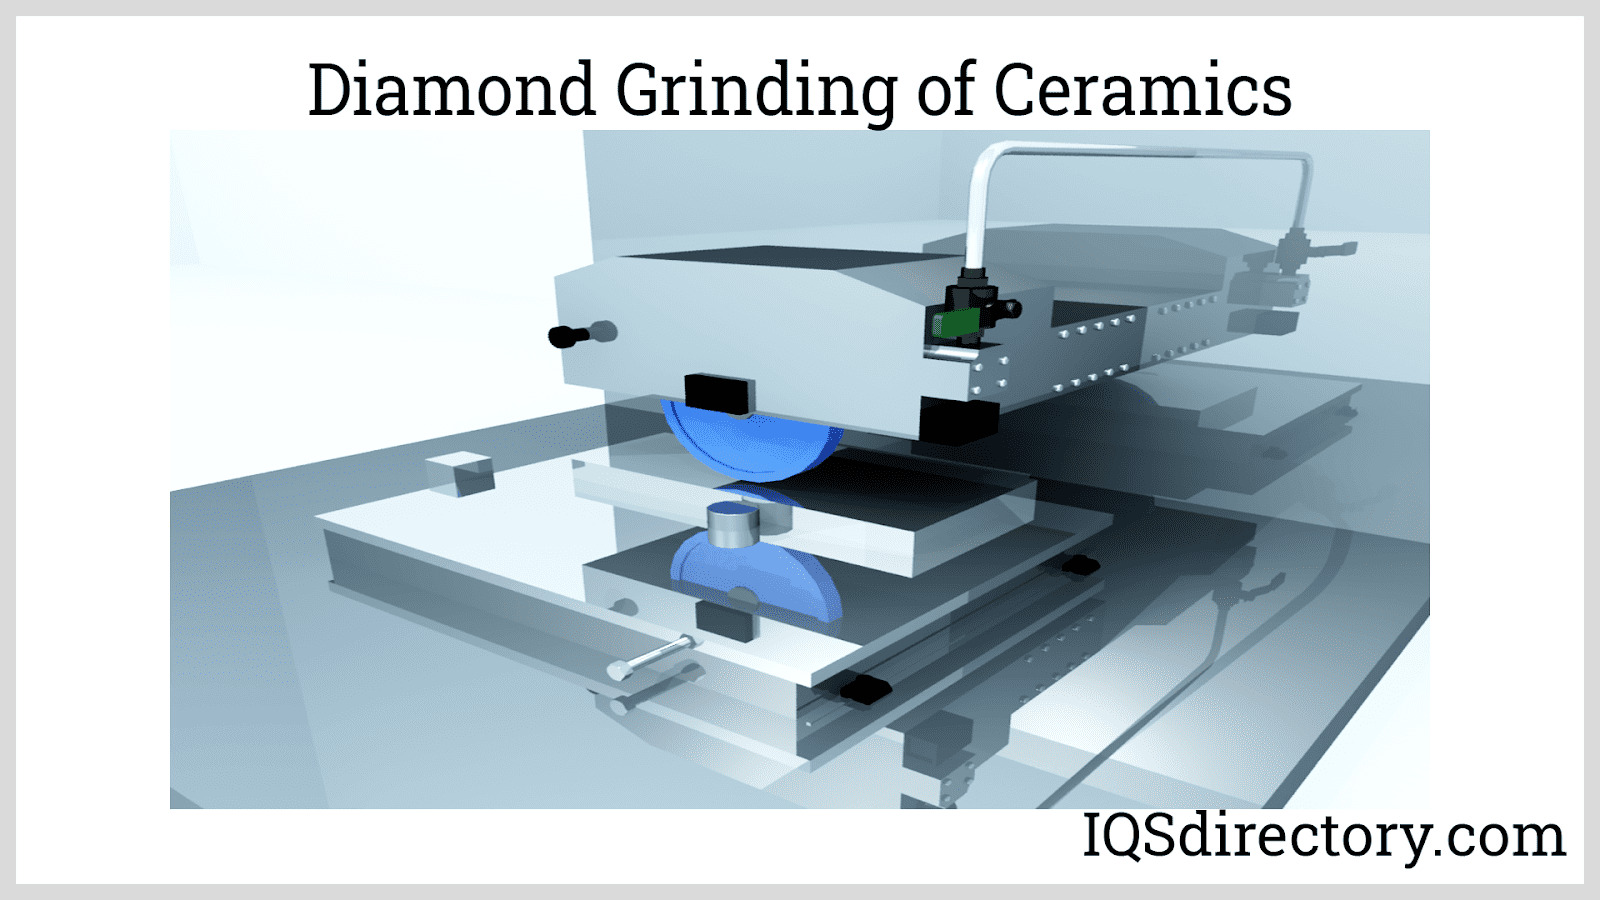 Diamond Grinding of Ceramics